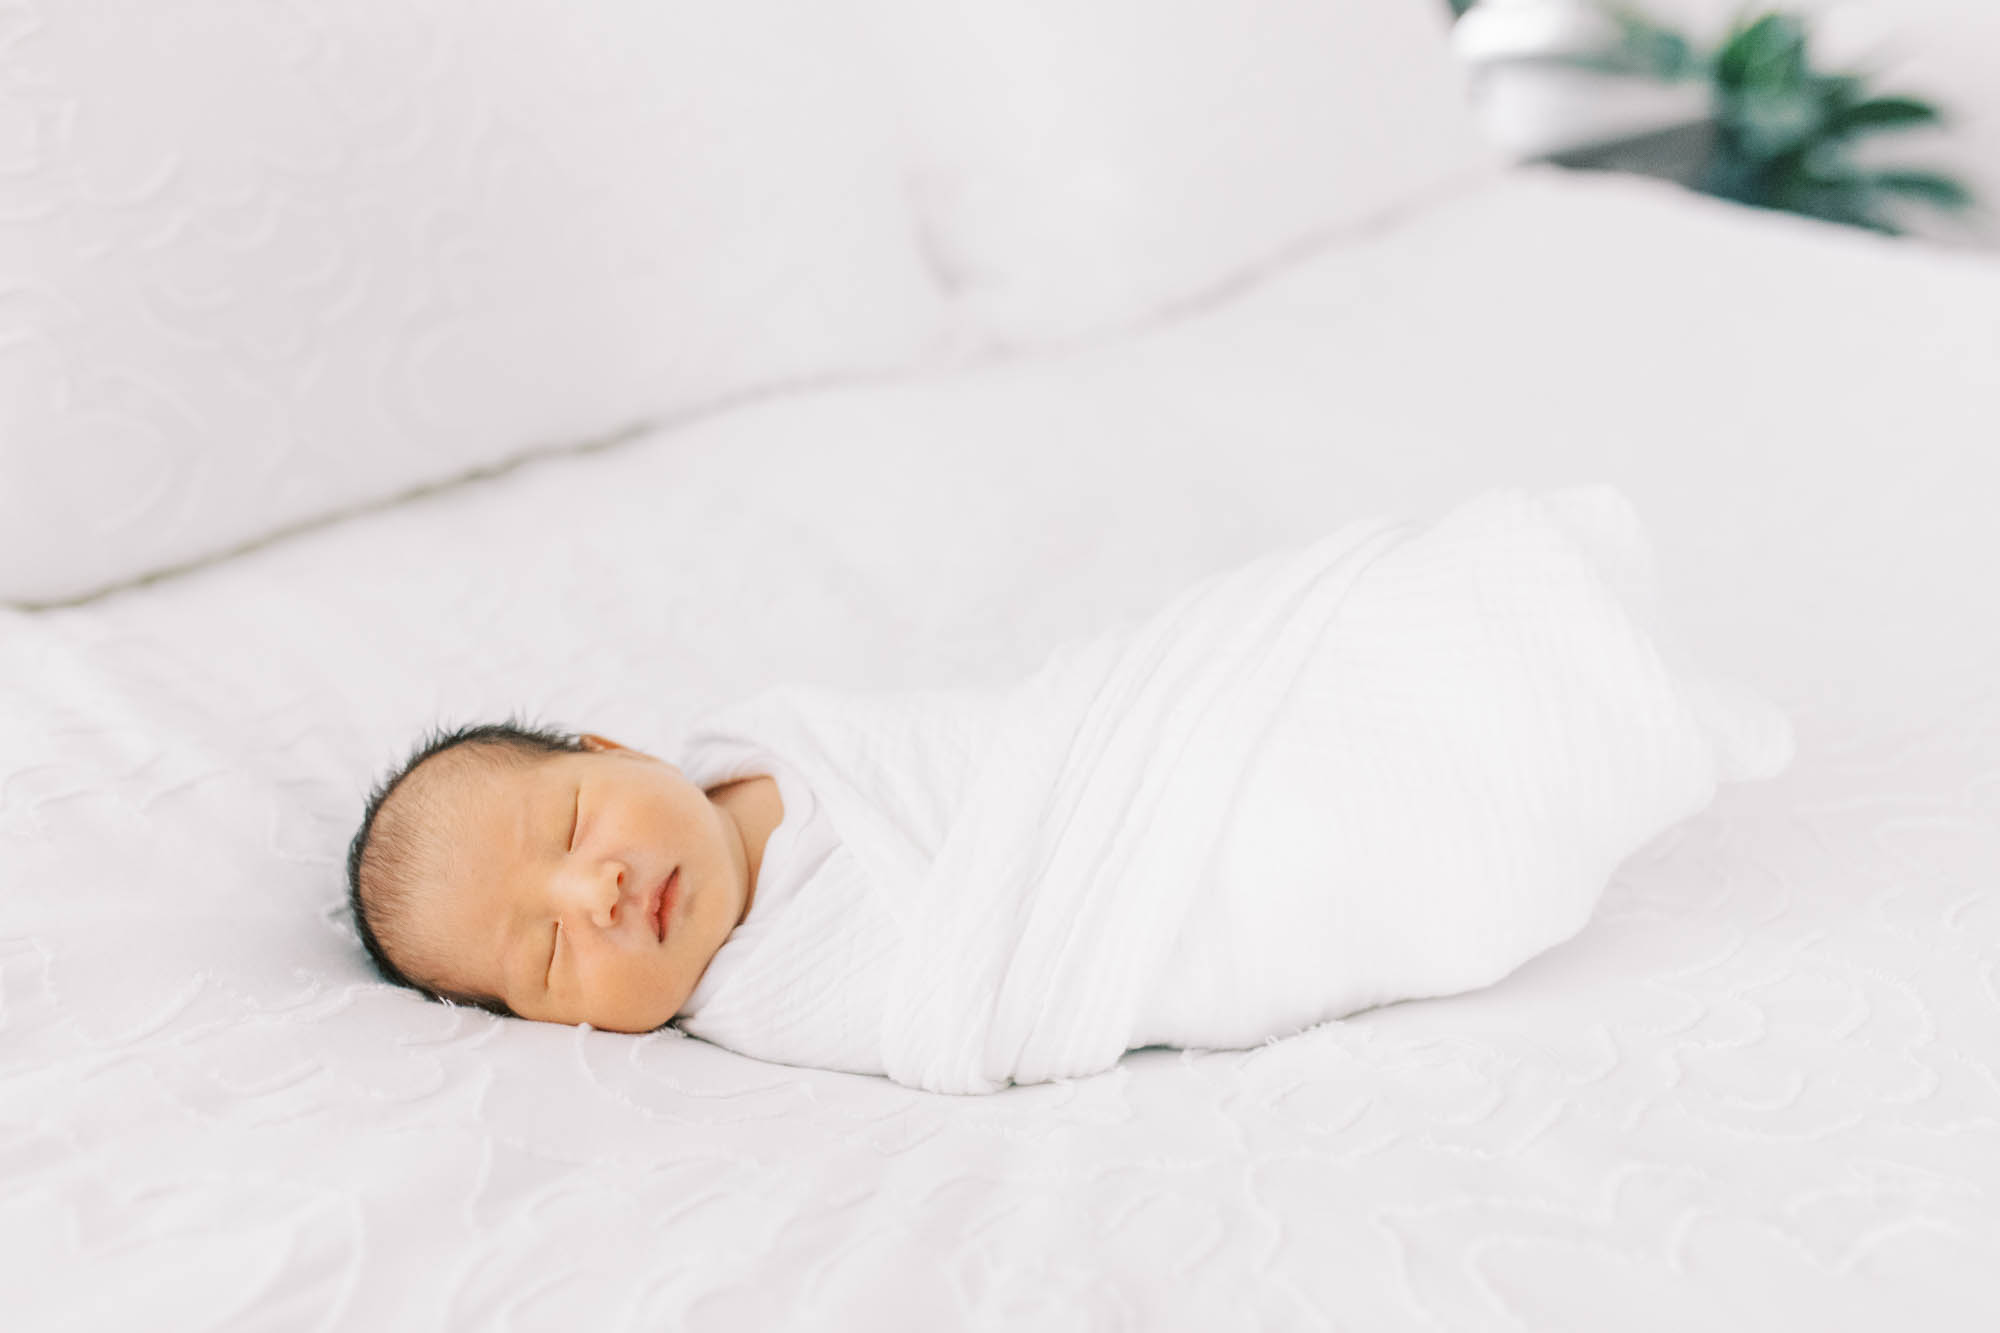 durham newborn photographer-1.jpg